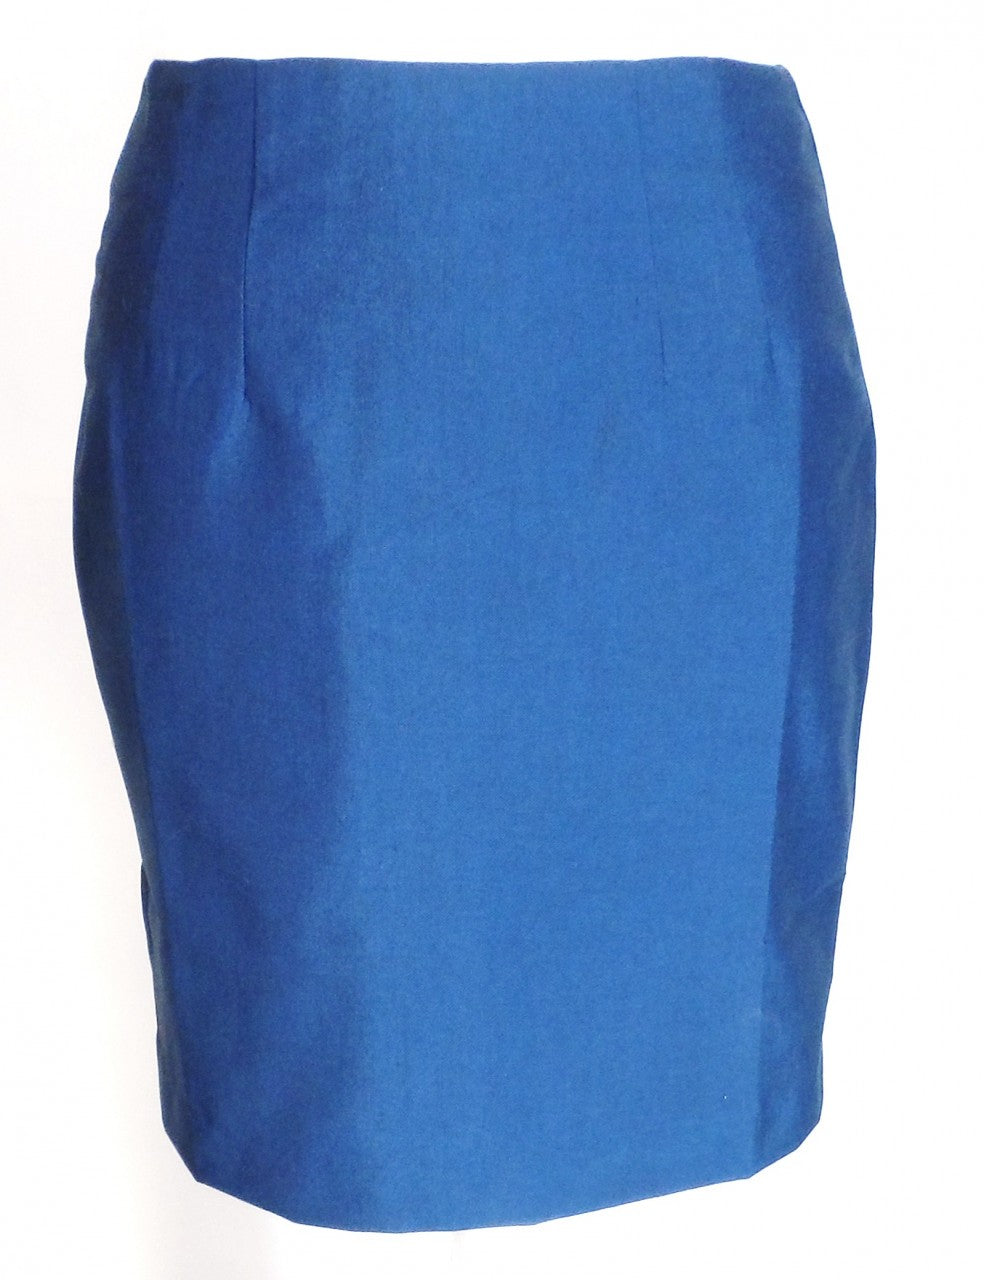 Relco Ladies Retro Mod Blue/Black Tonic Pencil Skirt